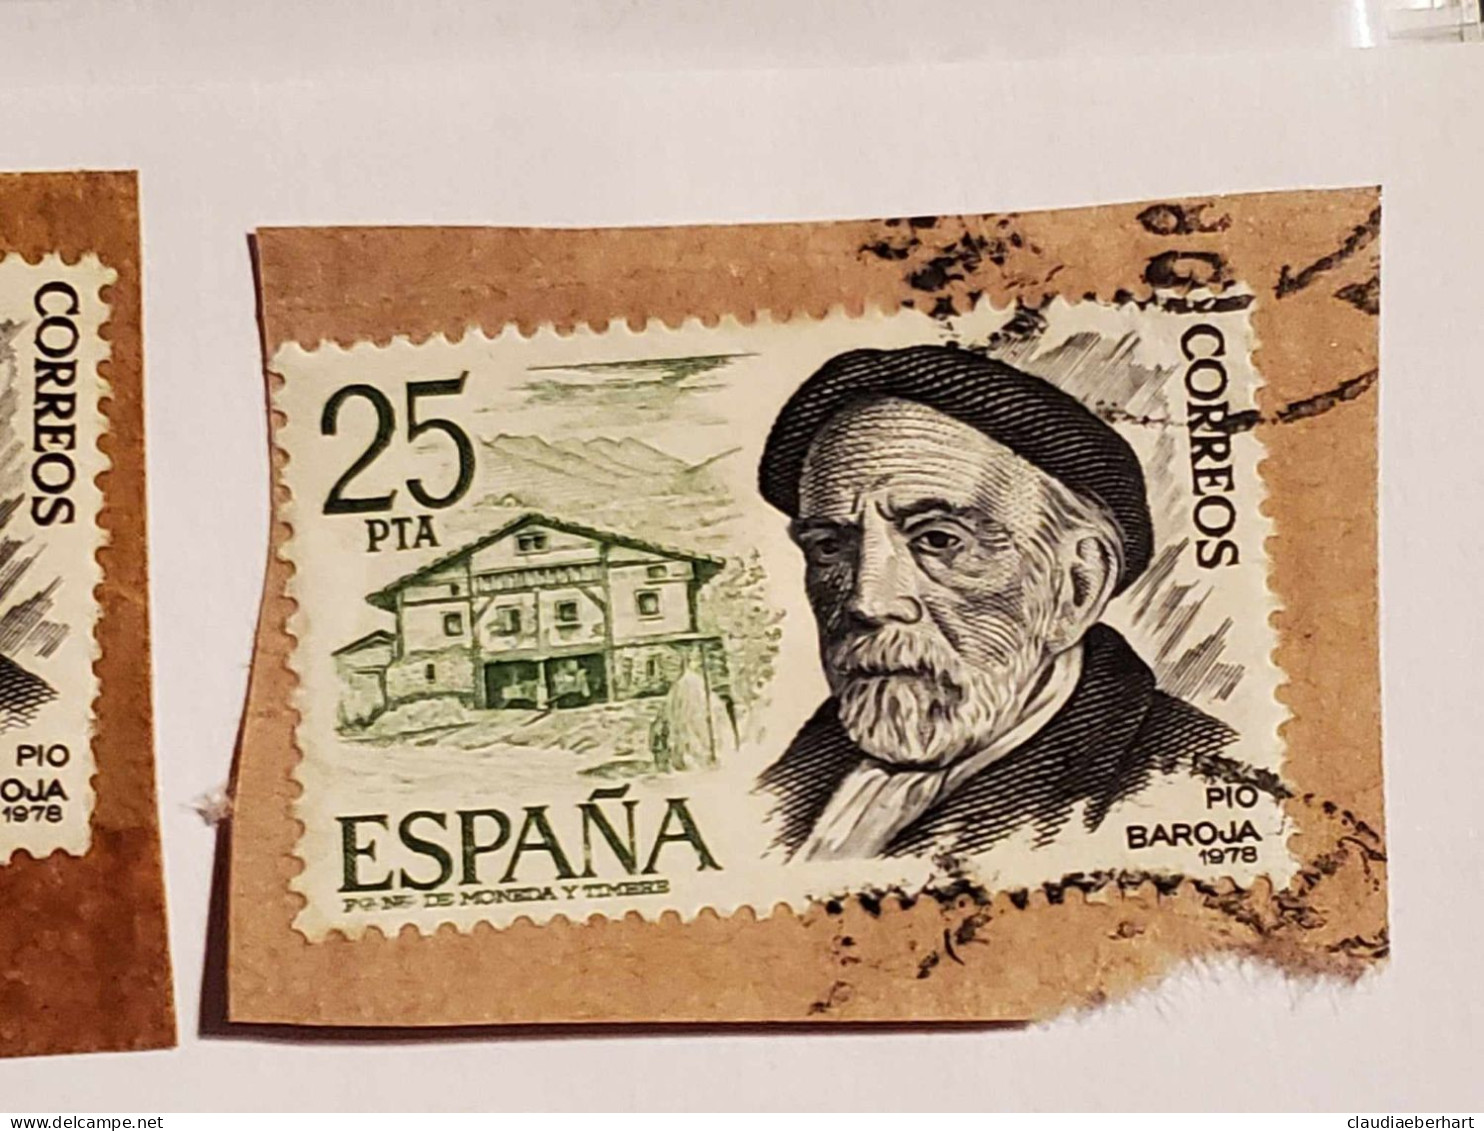 Pio Baroja - Used Stamps